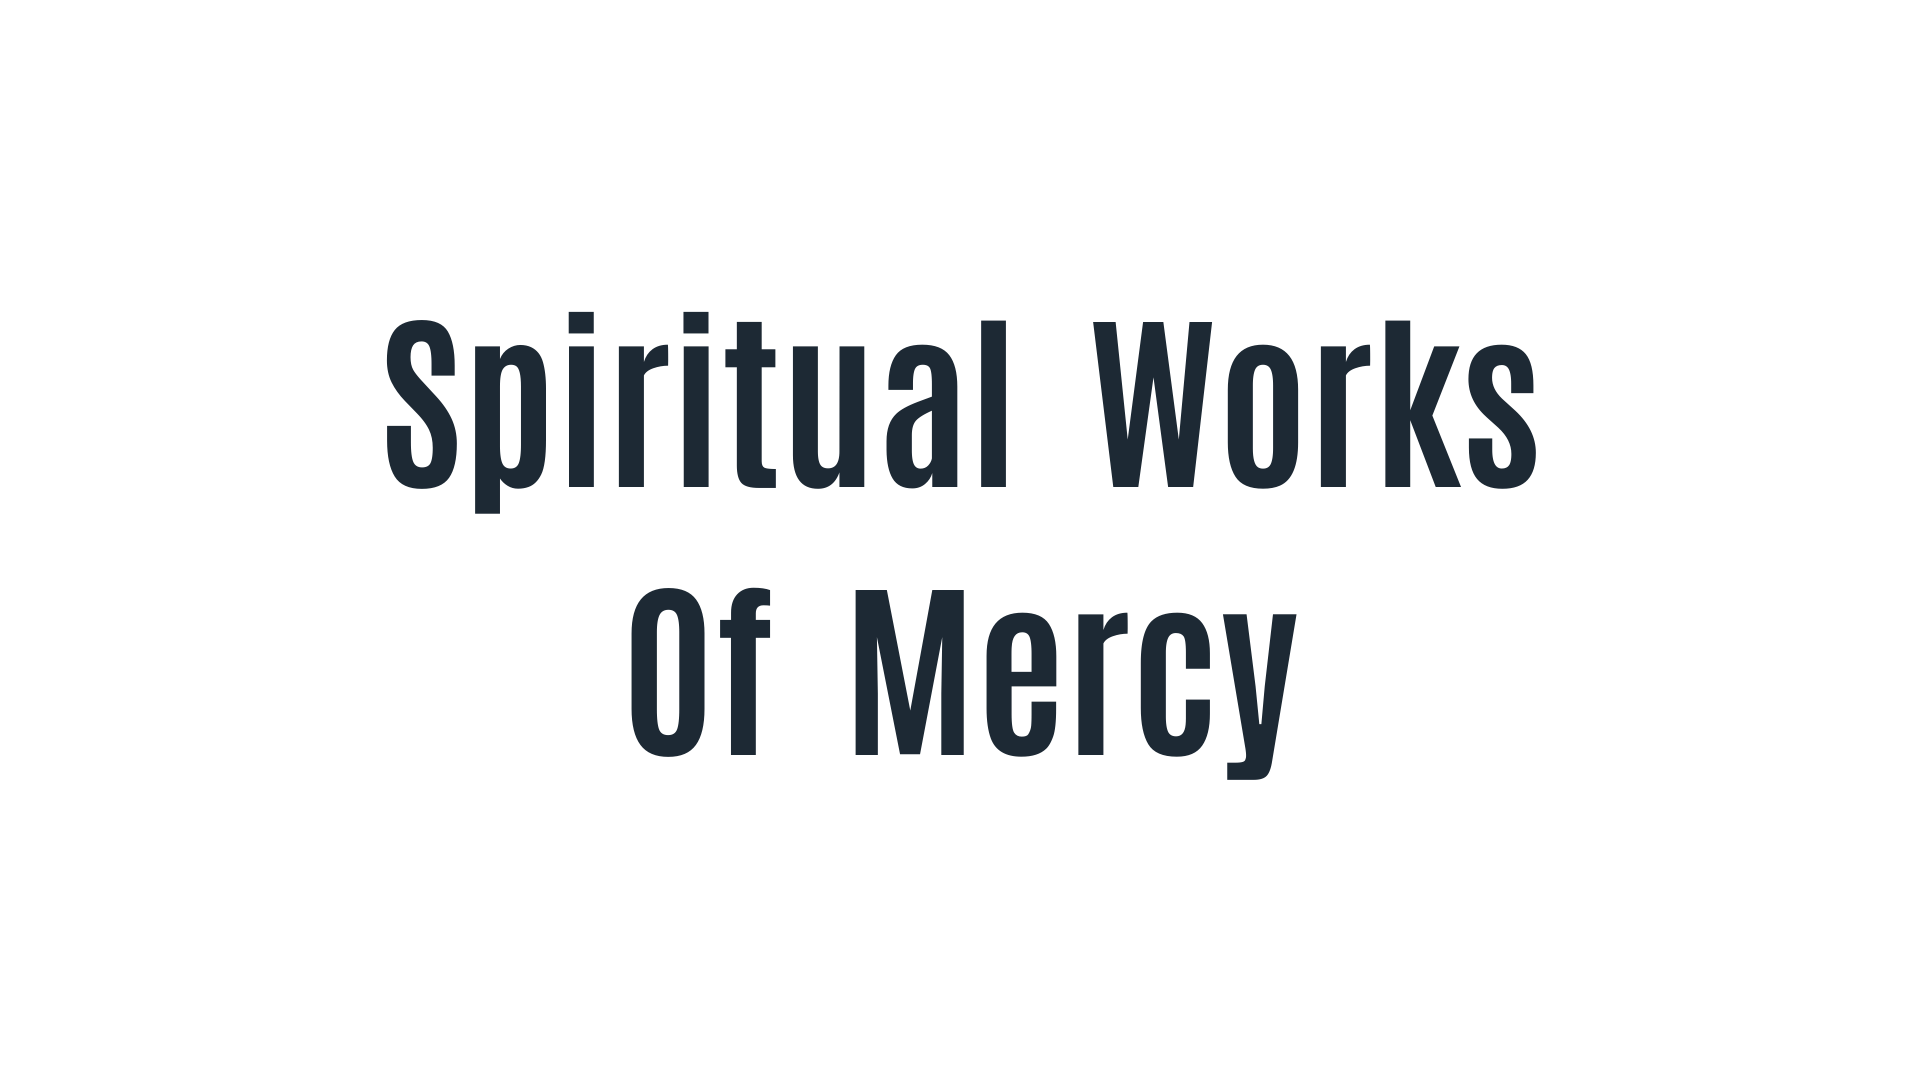 Spiritual work of mercy.png